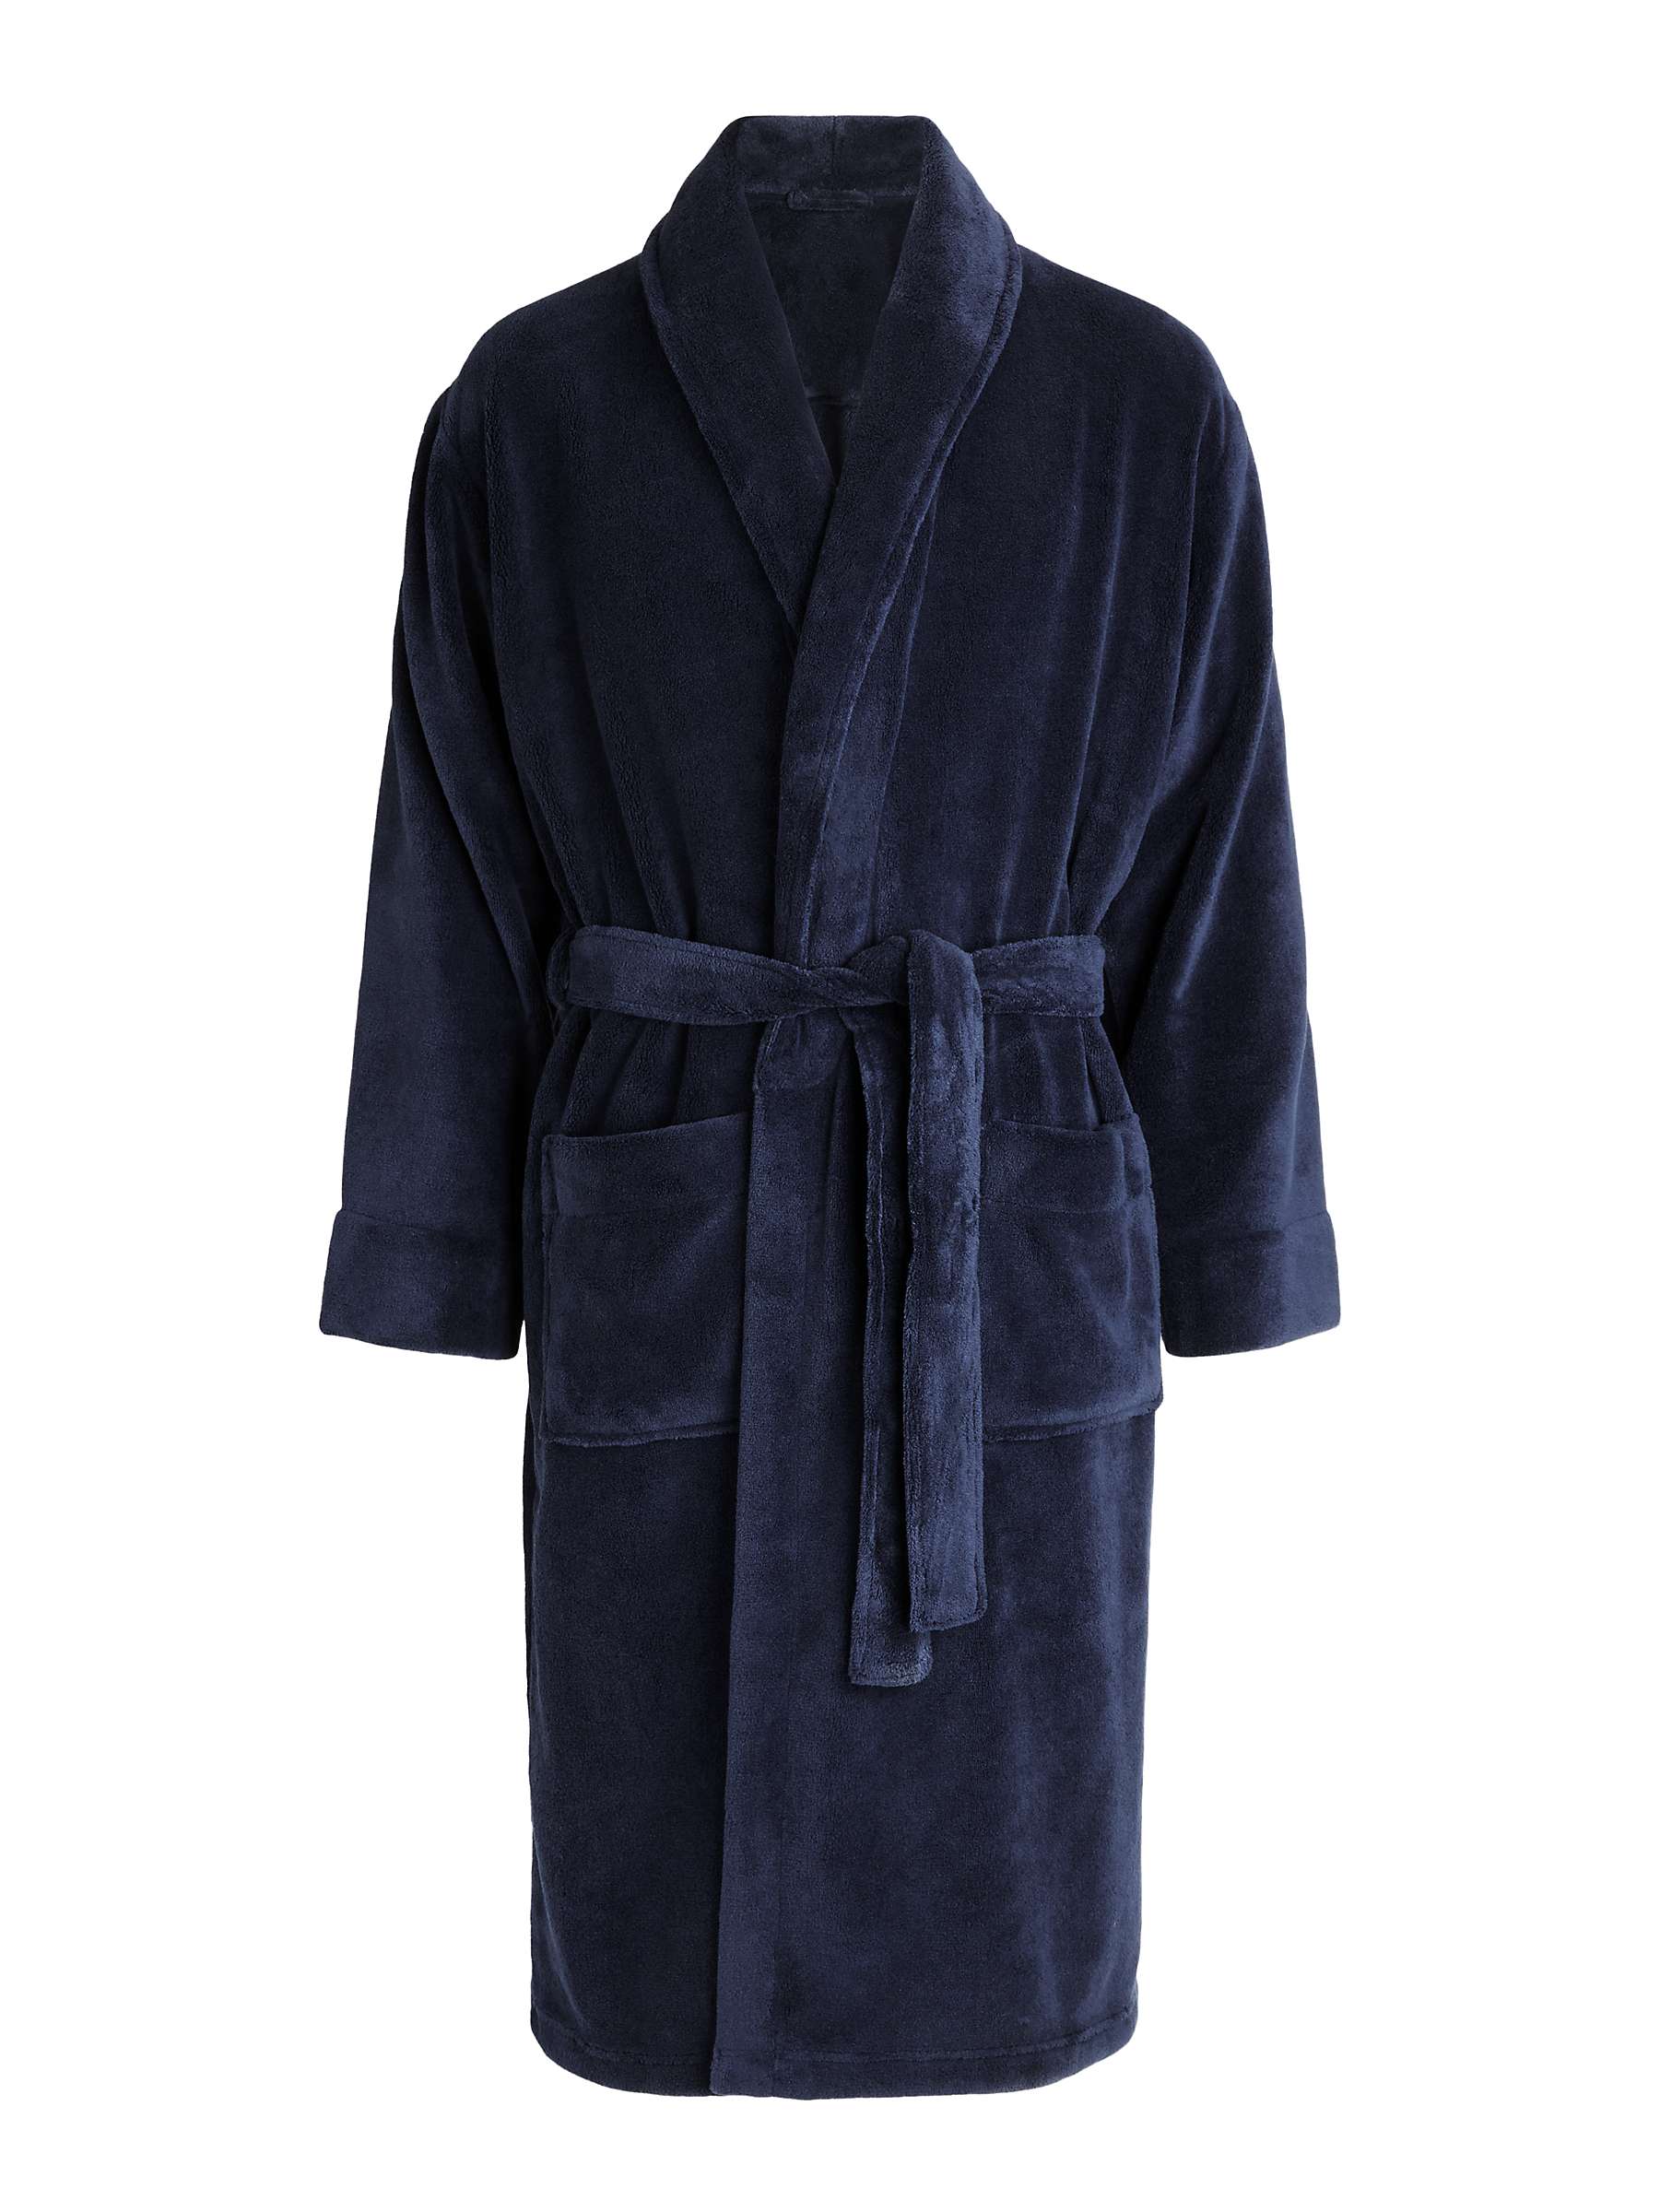 Buy John Lewis Sheared Fleece Robe Online at johnlewis.com